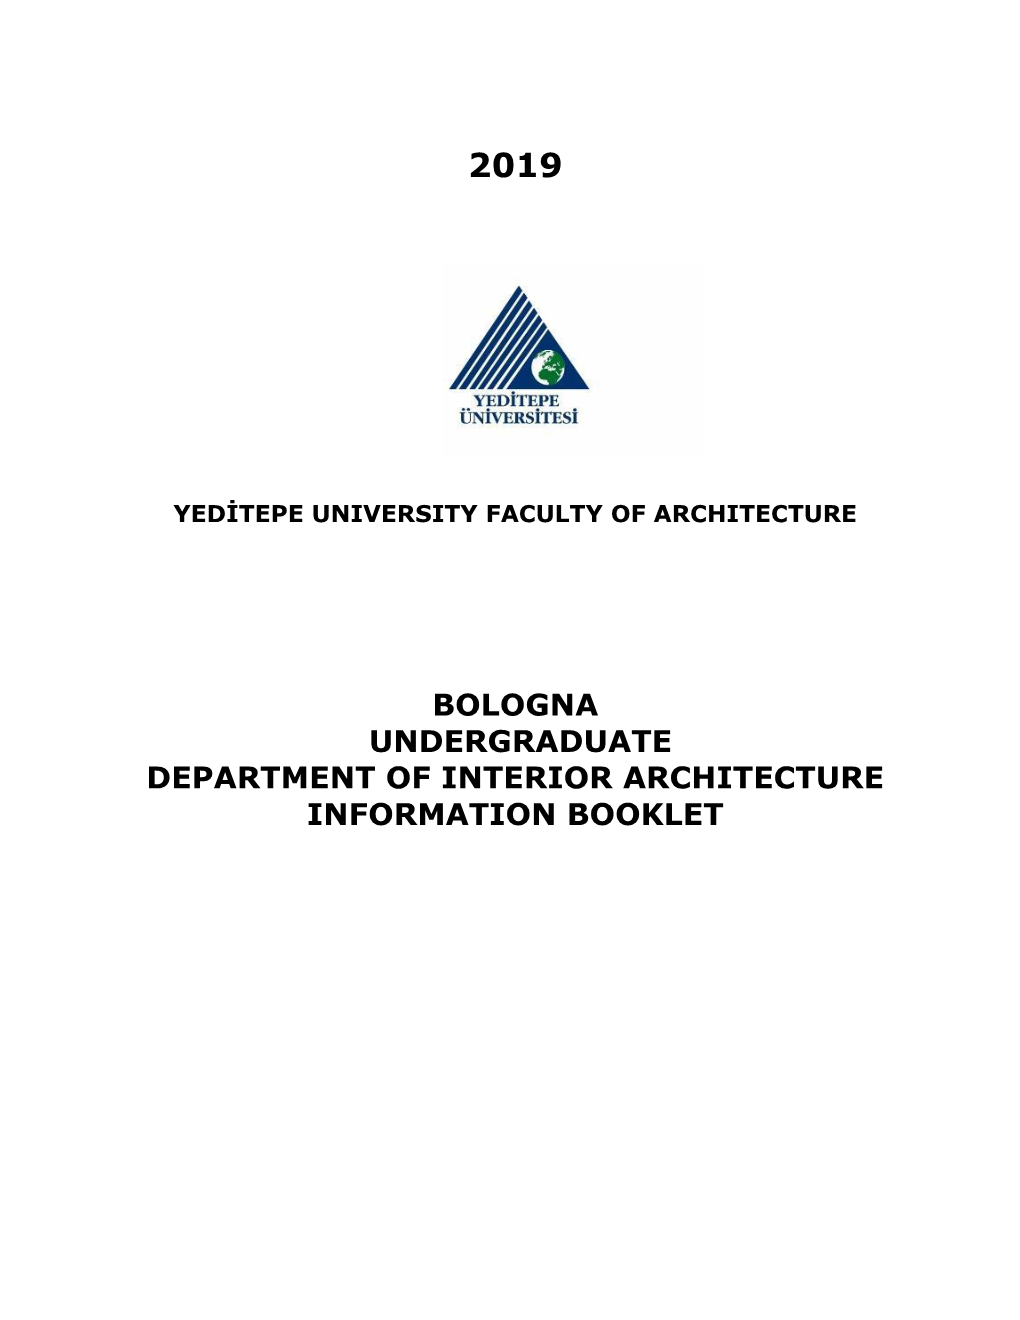 Bologna Undergraduate Department of Interior Architecture Information Booklet